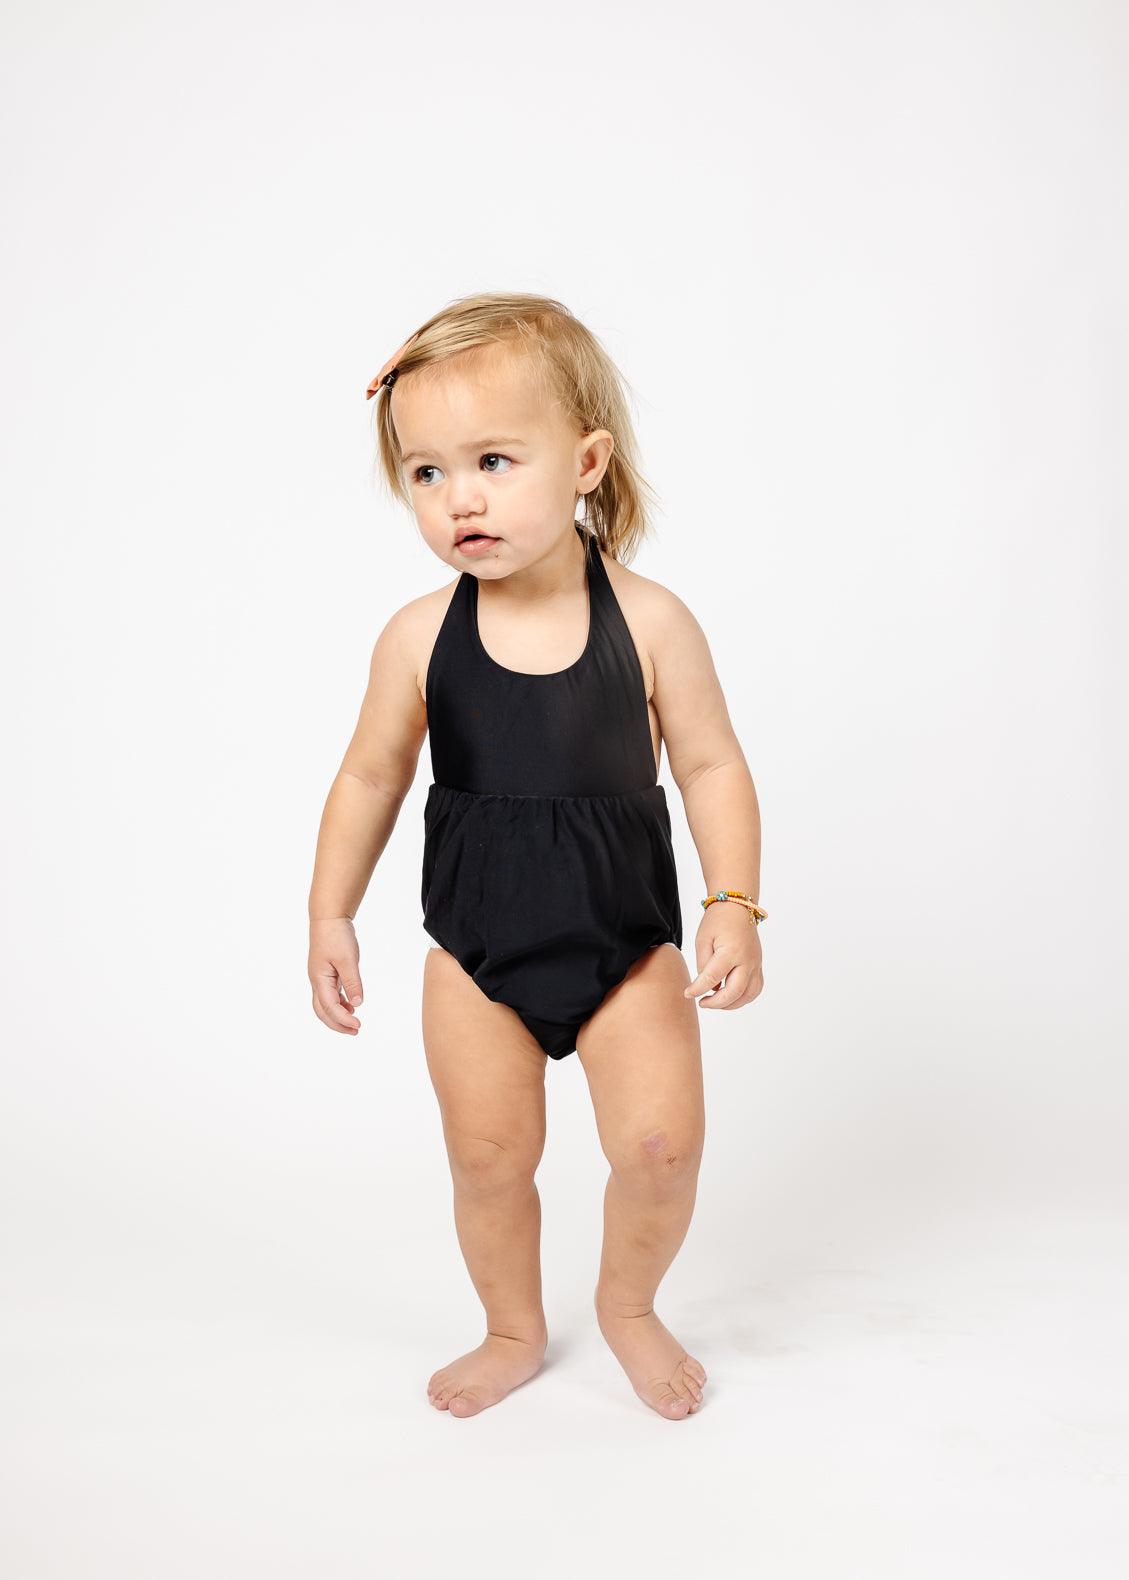 Kortni Jeane Swimwear V-Neck Top Black – Modern Natural Baby